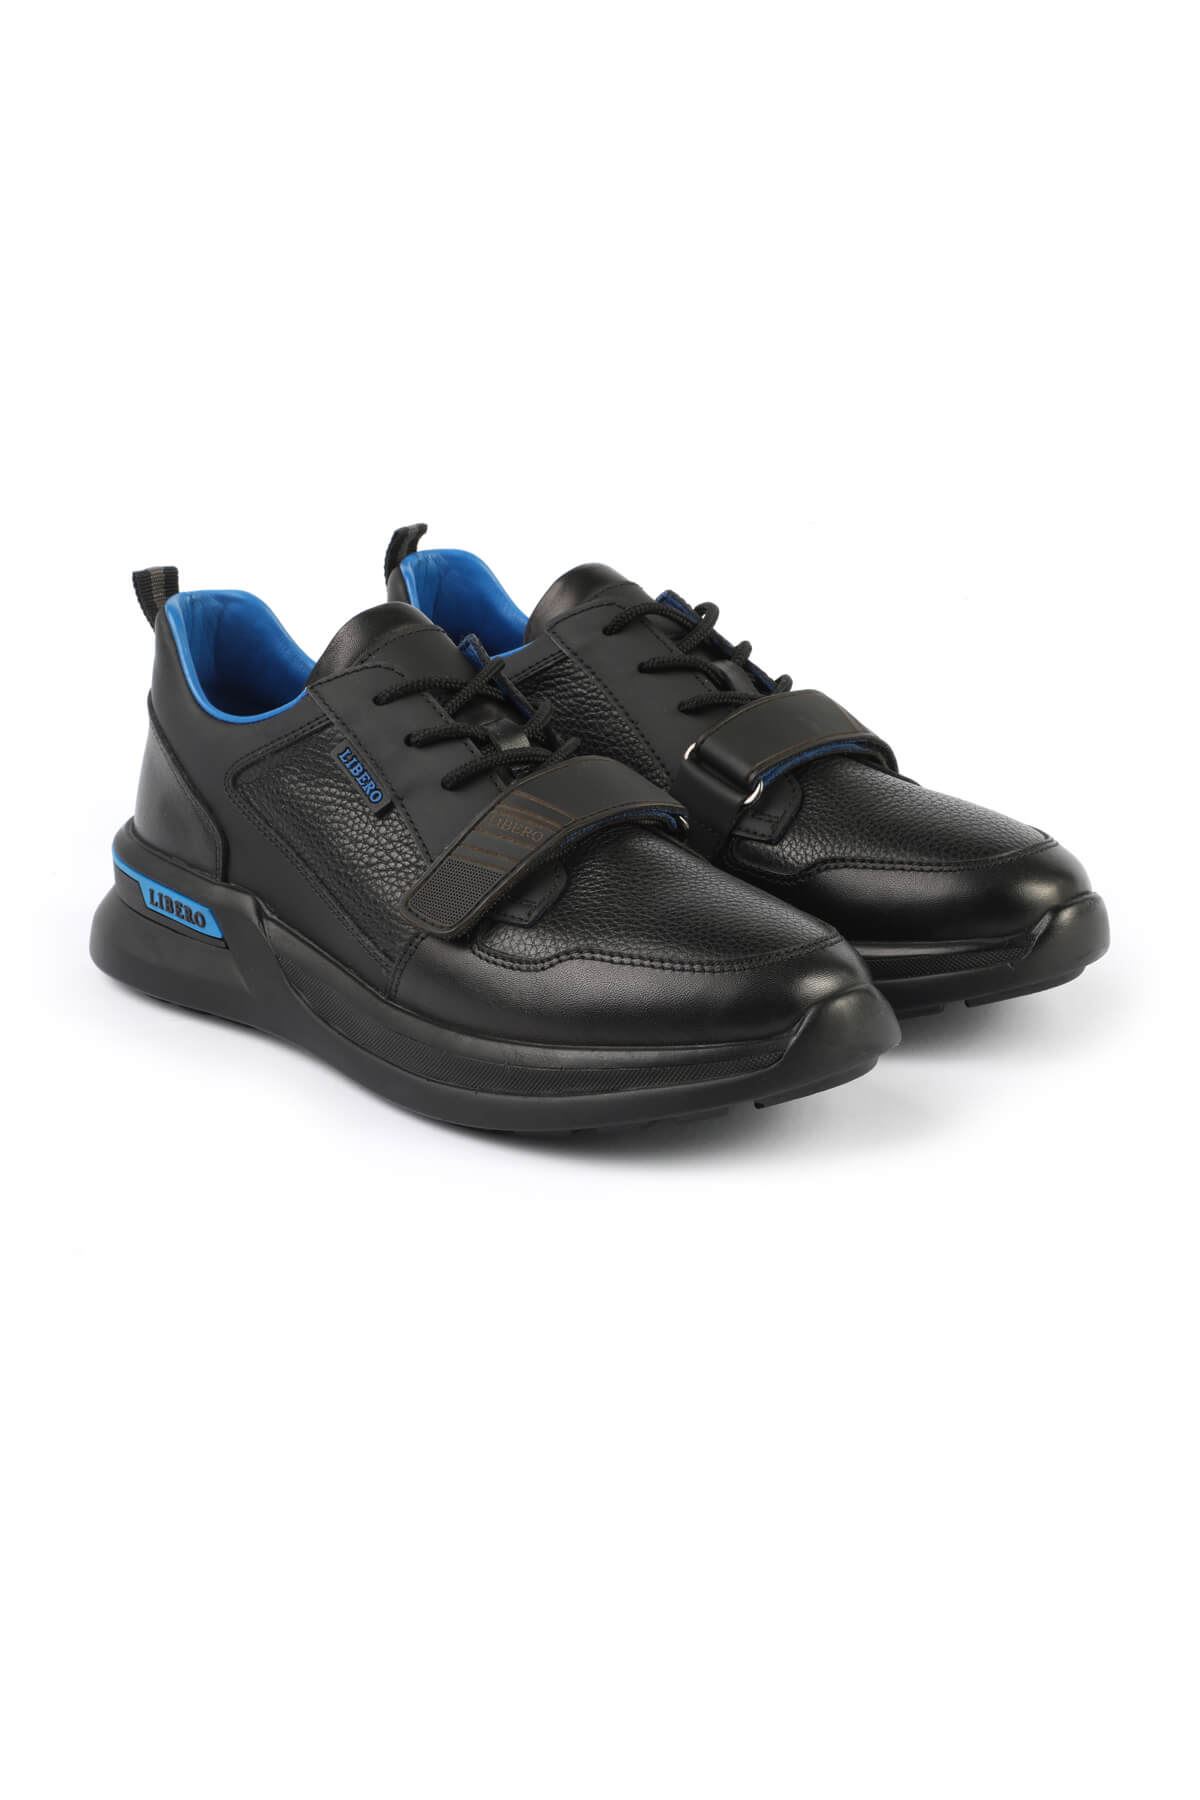 Libero 3141 Black Blue Sport Shoes